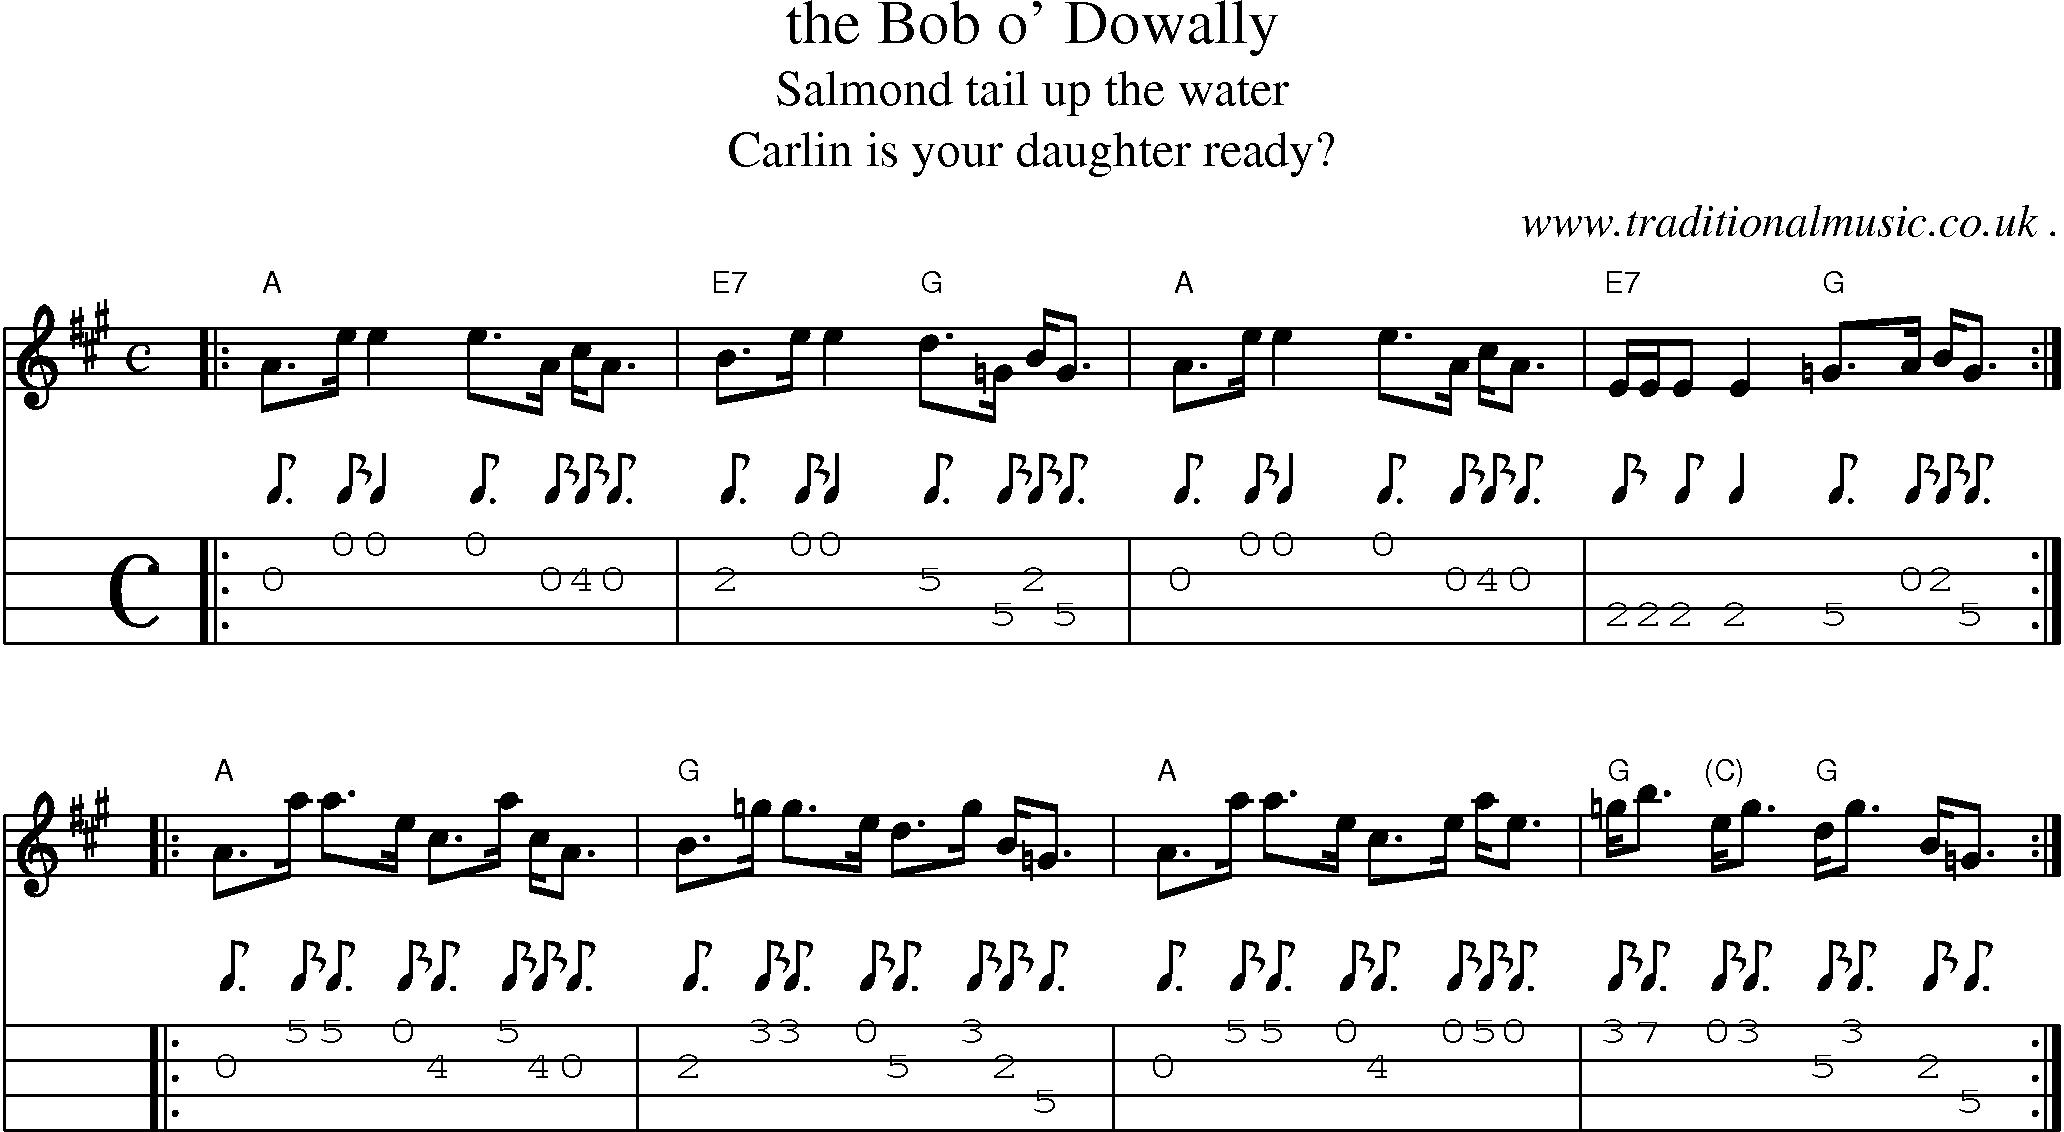 Sheet-music  score, Chords and Mandolin Tabs for The Bob O Dowally